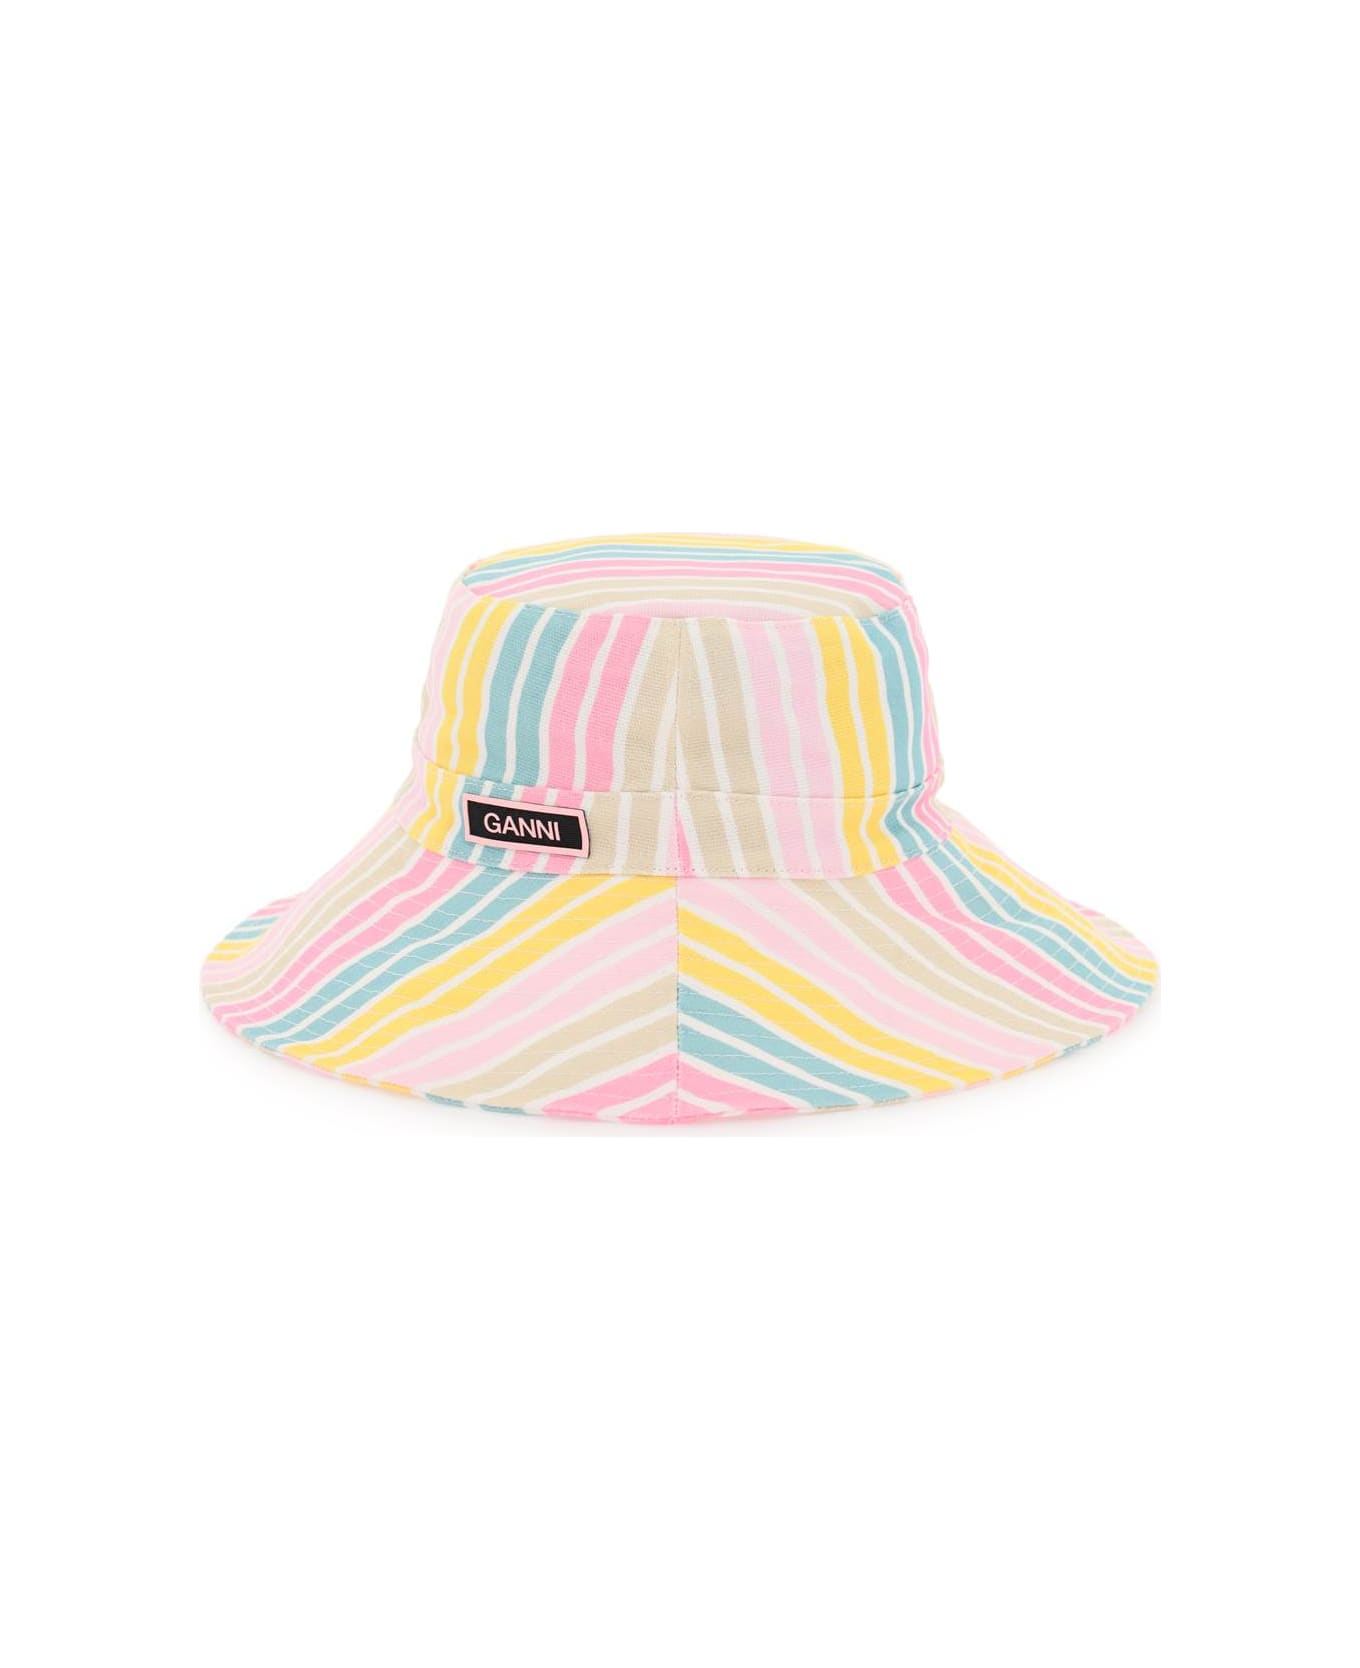 Ganni Stripe Bucket Hat - MULTICOLOUR ヘアアクセサリー